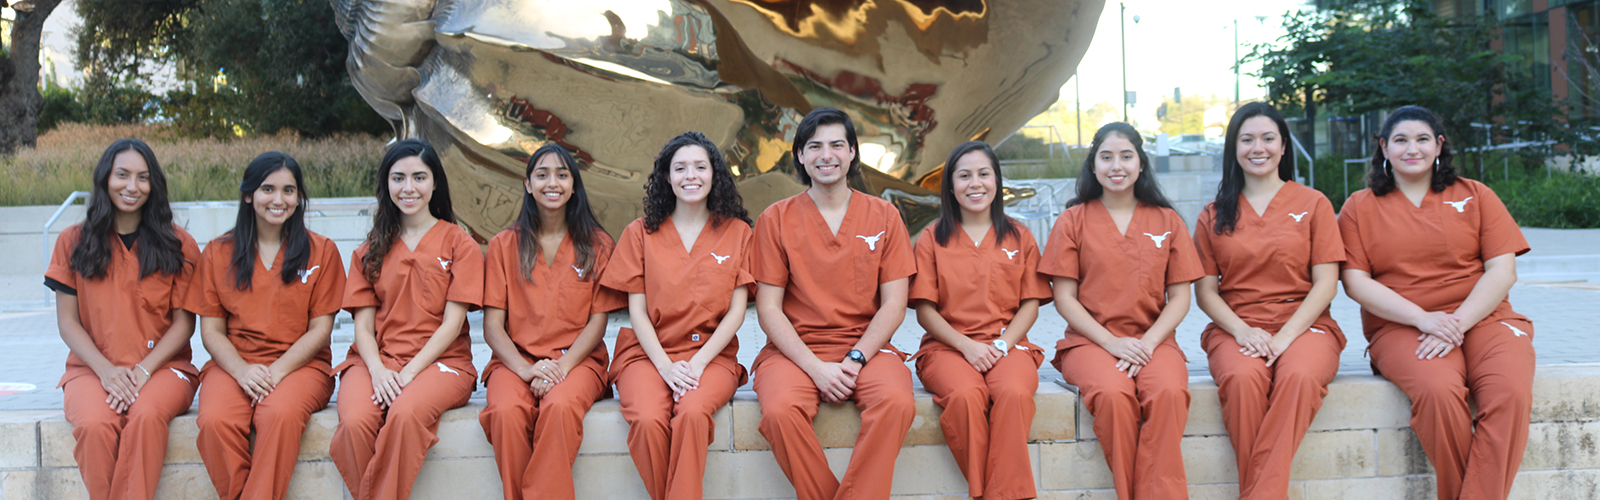 Hispanic Nursing Student Association Members